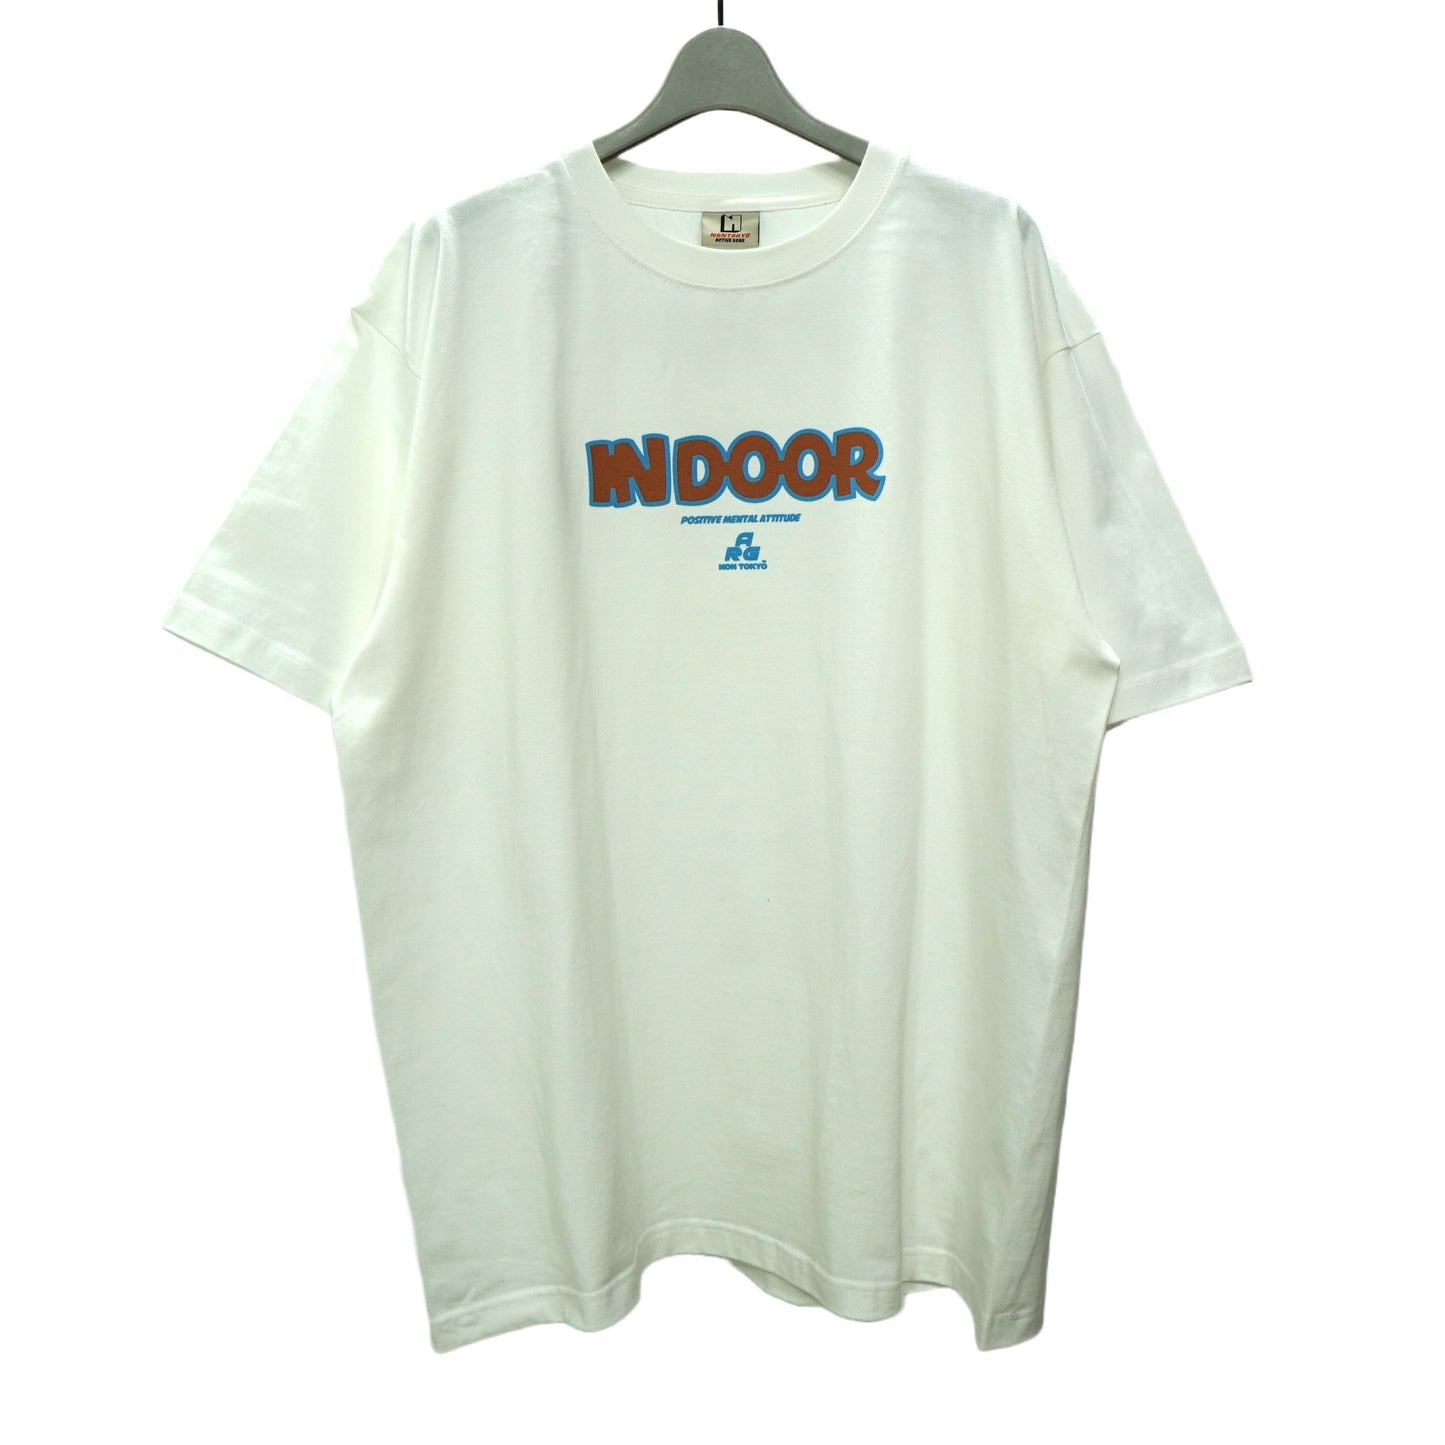 NON TOKYO / INDOOR PRINT T/S (WHITE) / 〈ノントーキョー〉インドアプリントTシャツ  (ホワイト)